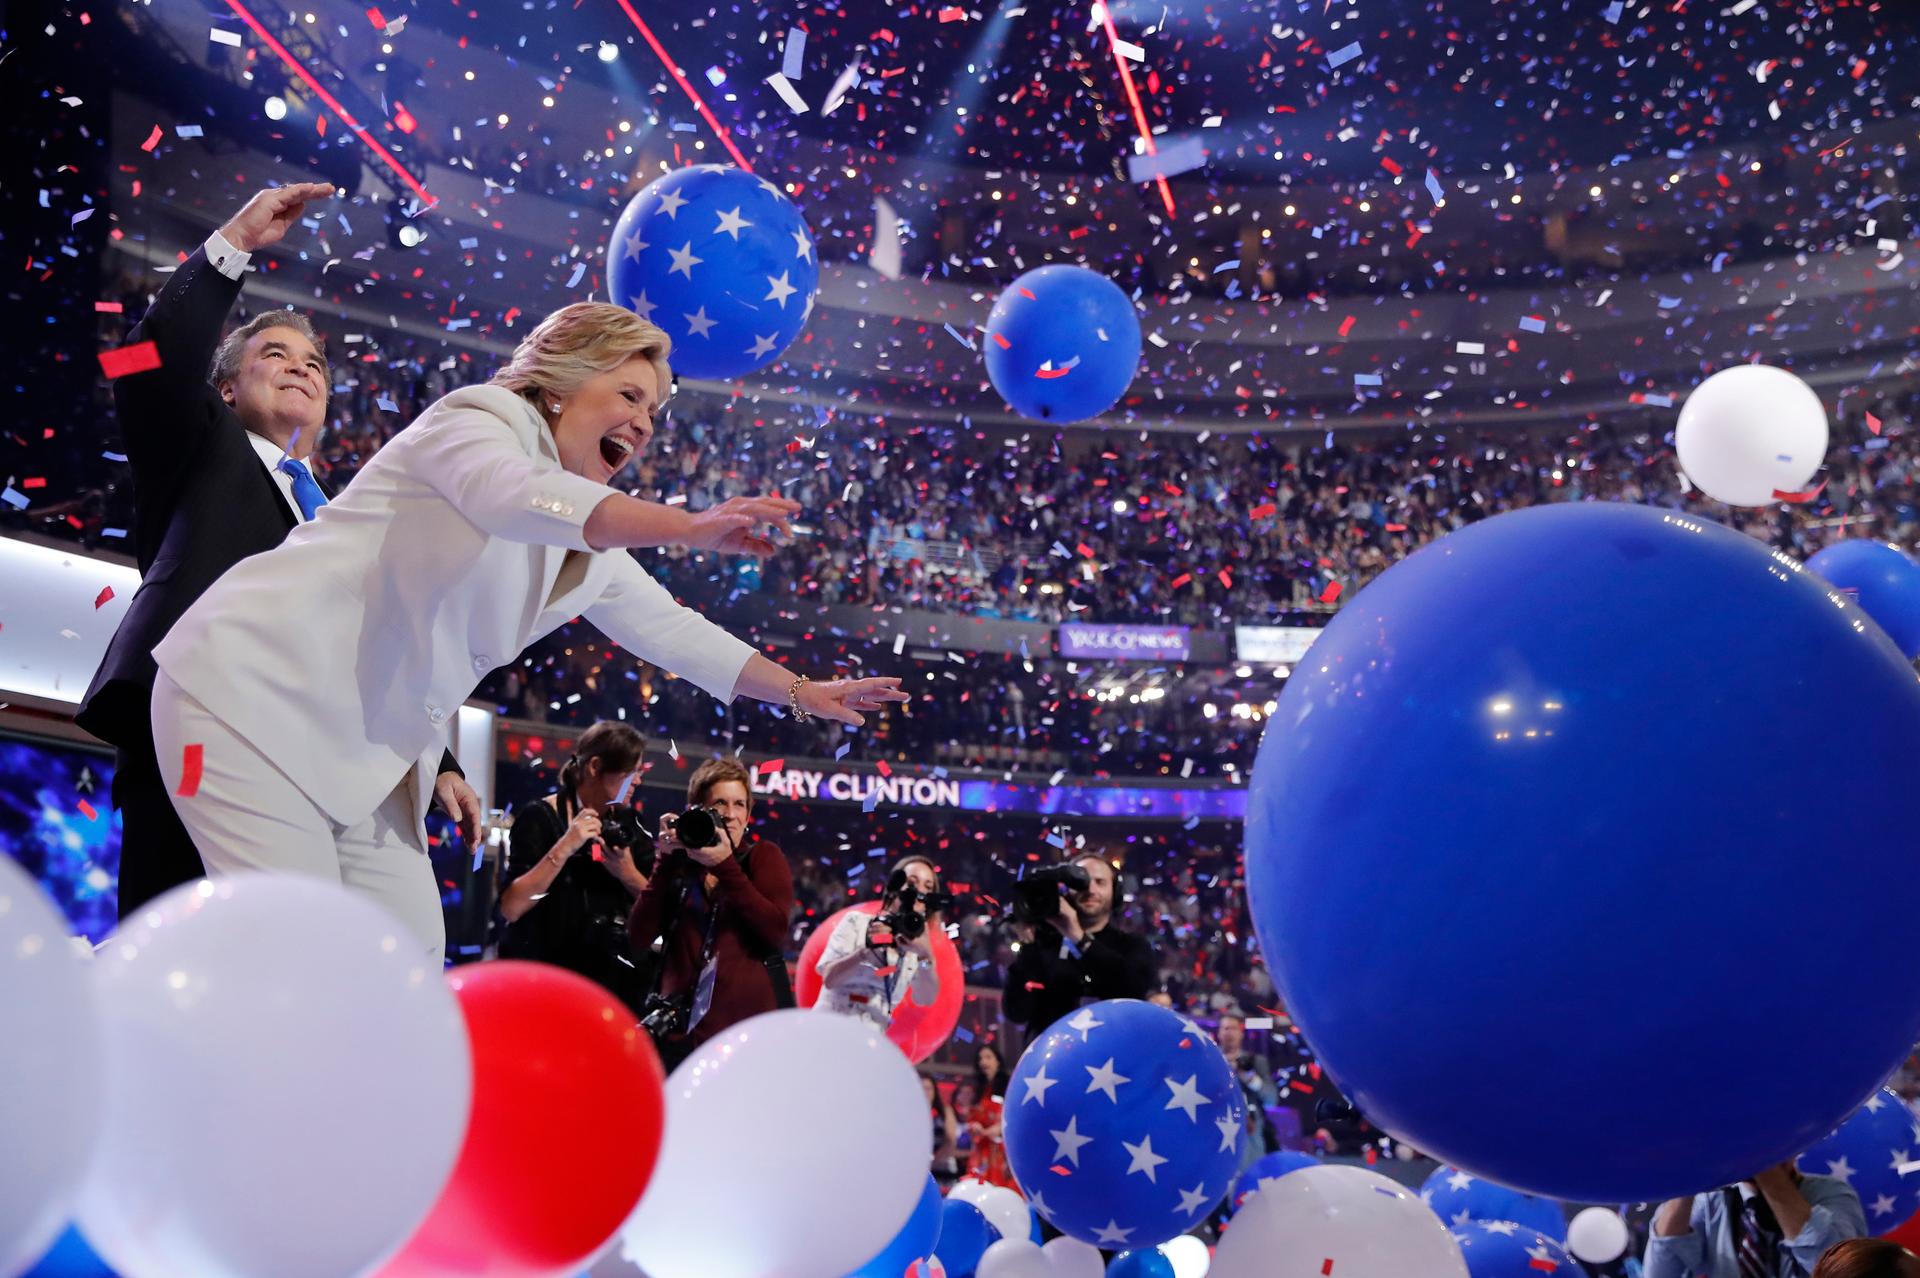 Hilary Clinton accepts the Democratic nomination